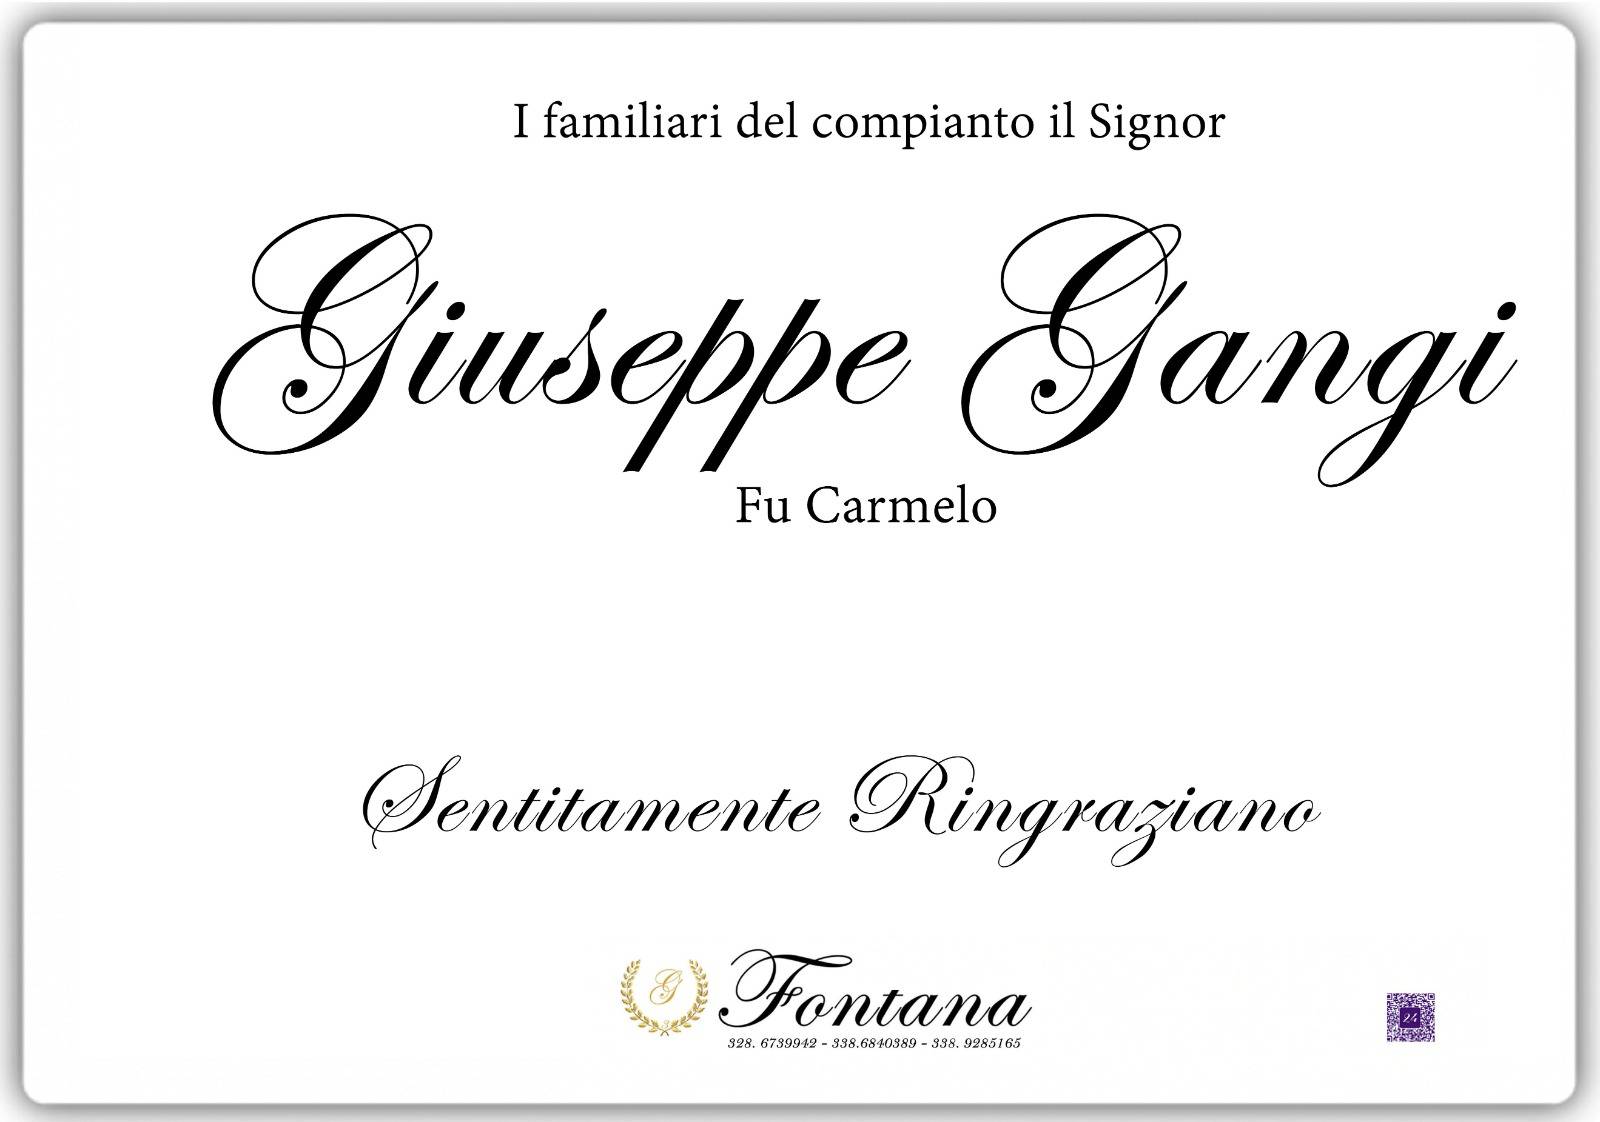 Giuseppe Gangi